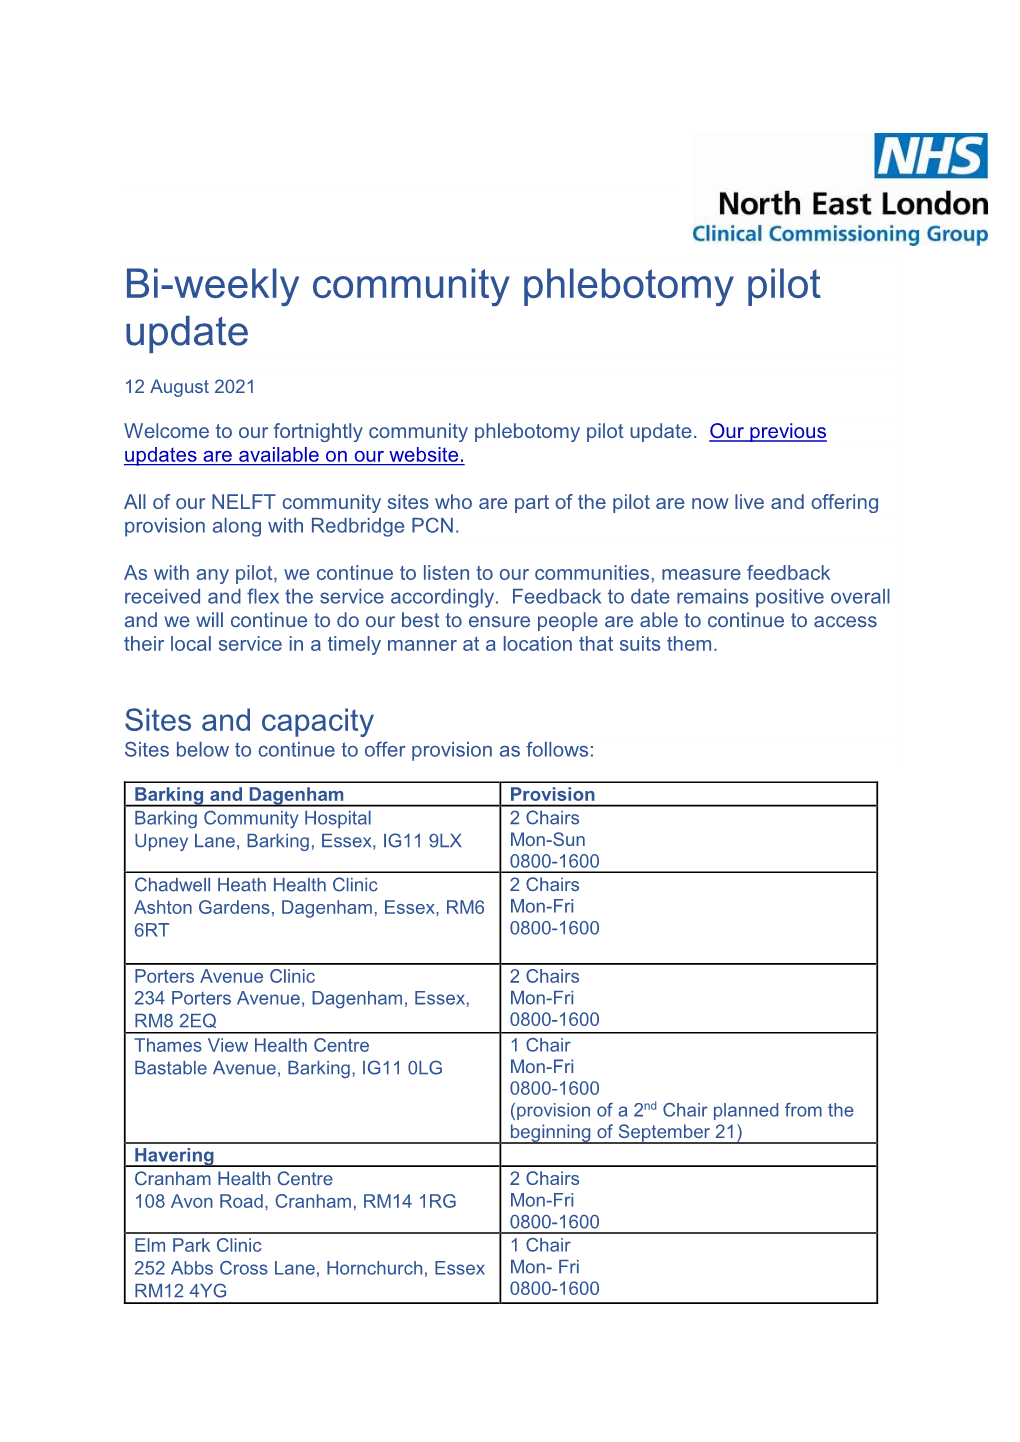 Bi-Weekly Community Phlebotomy Pilot Update